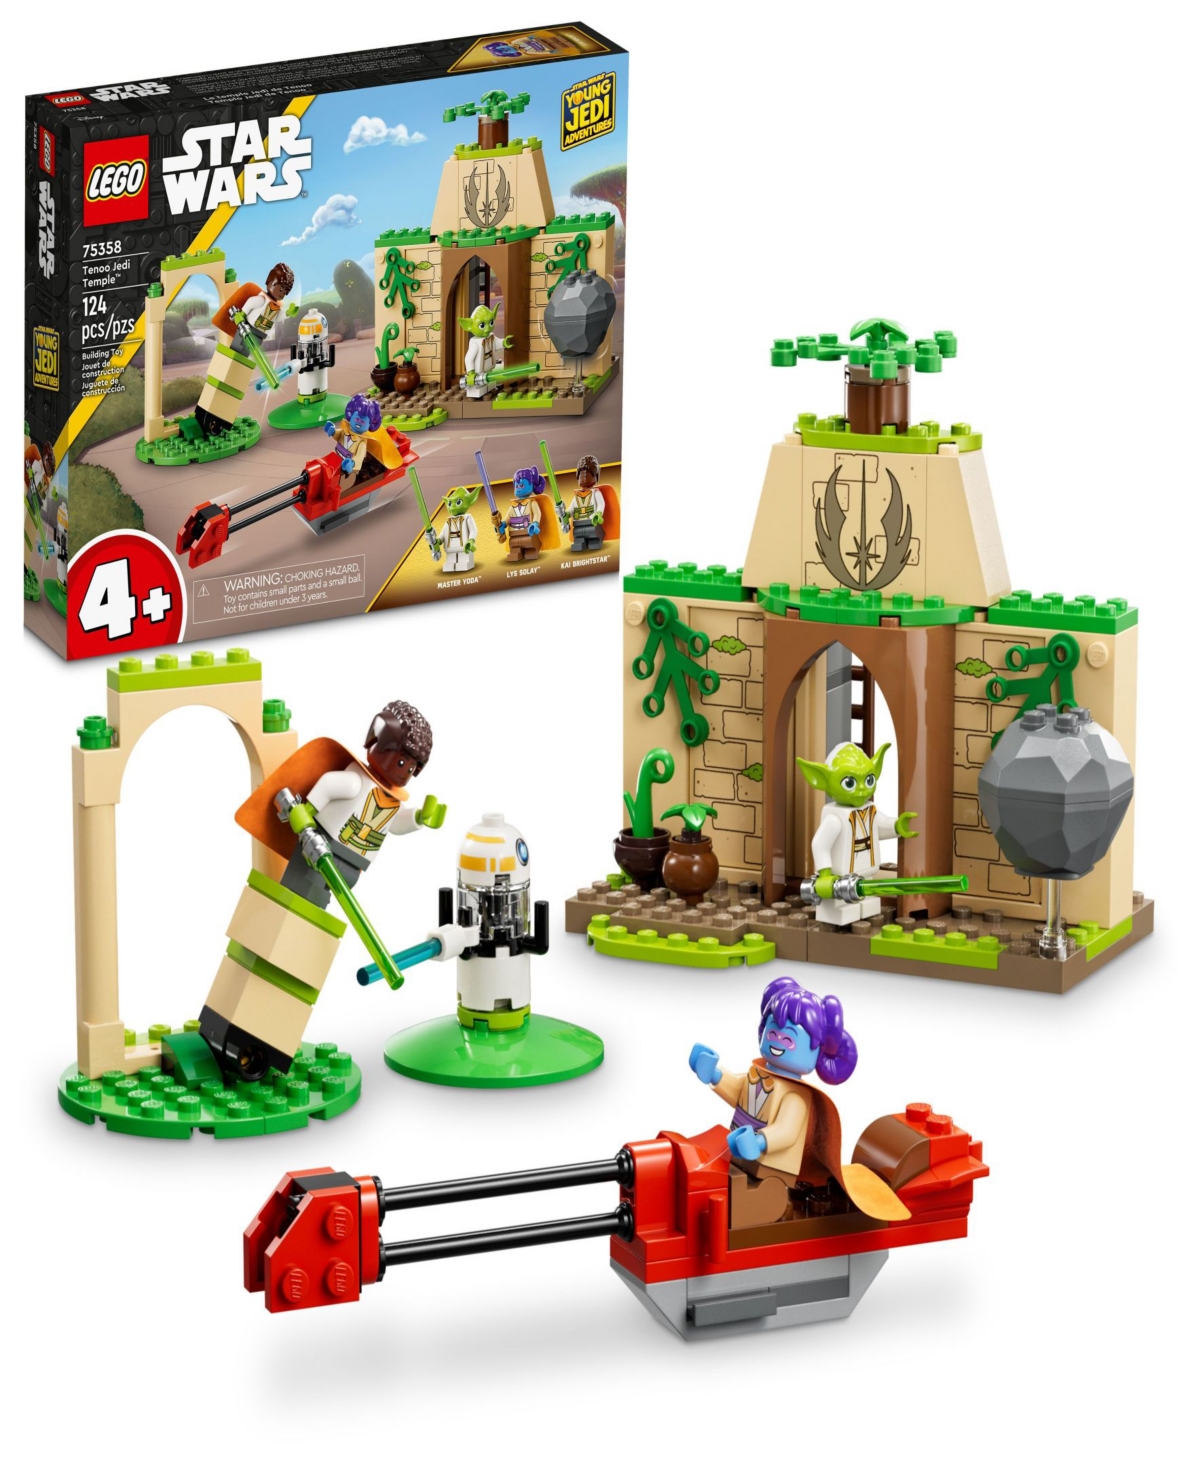 Lego Kids' Star Wars Tenoo Jedi Temple Building Toy Set For Preschoolers 75358 In Multicolor